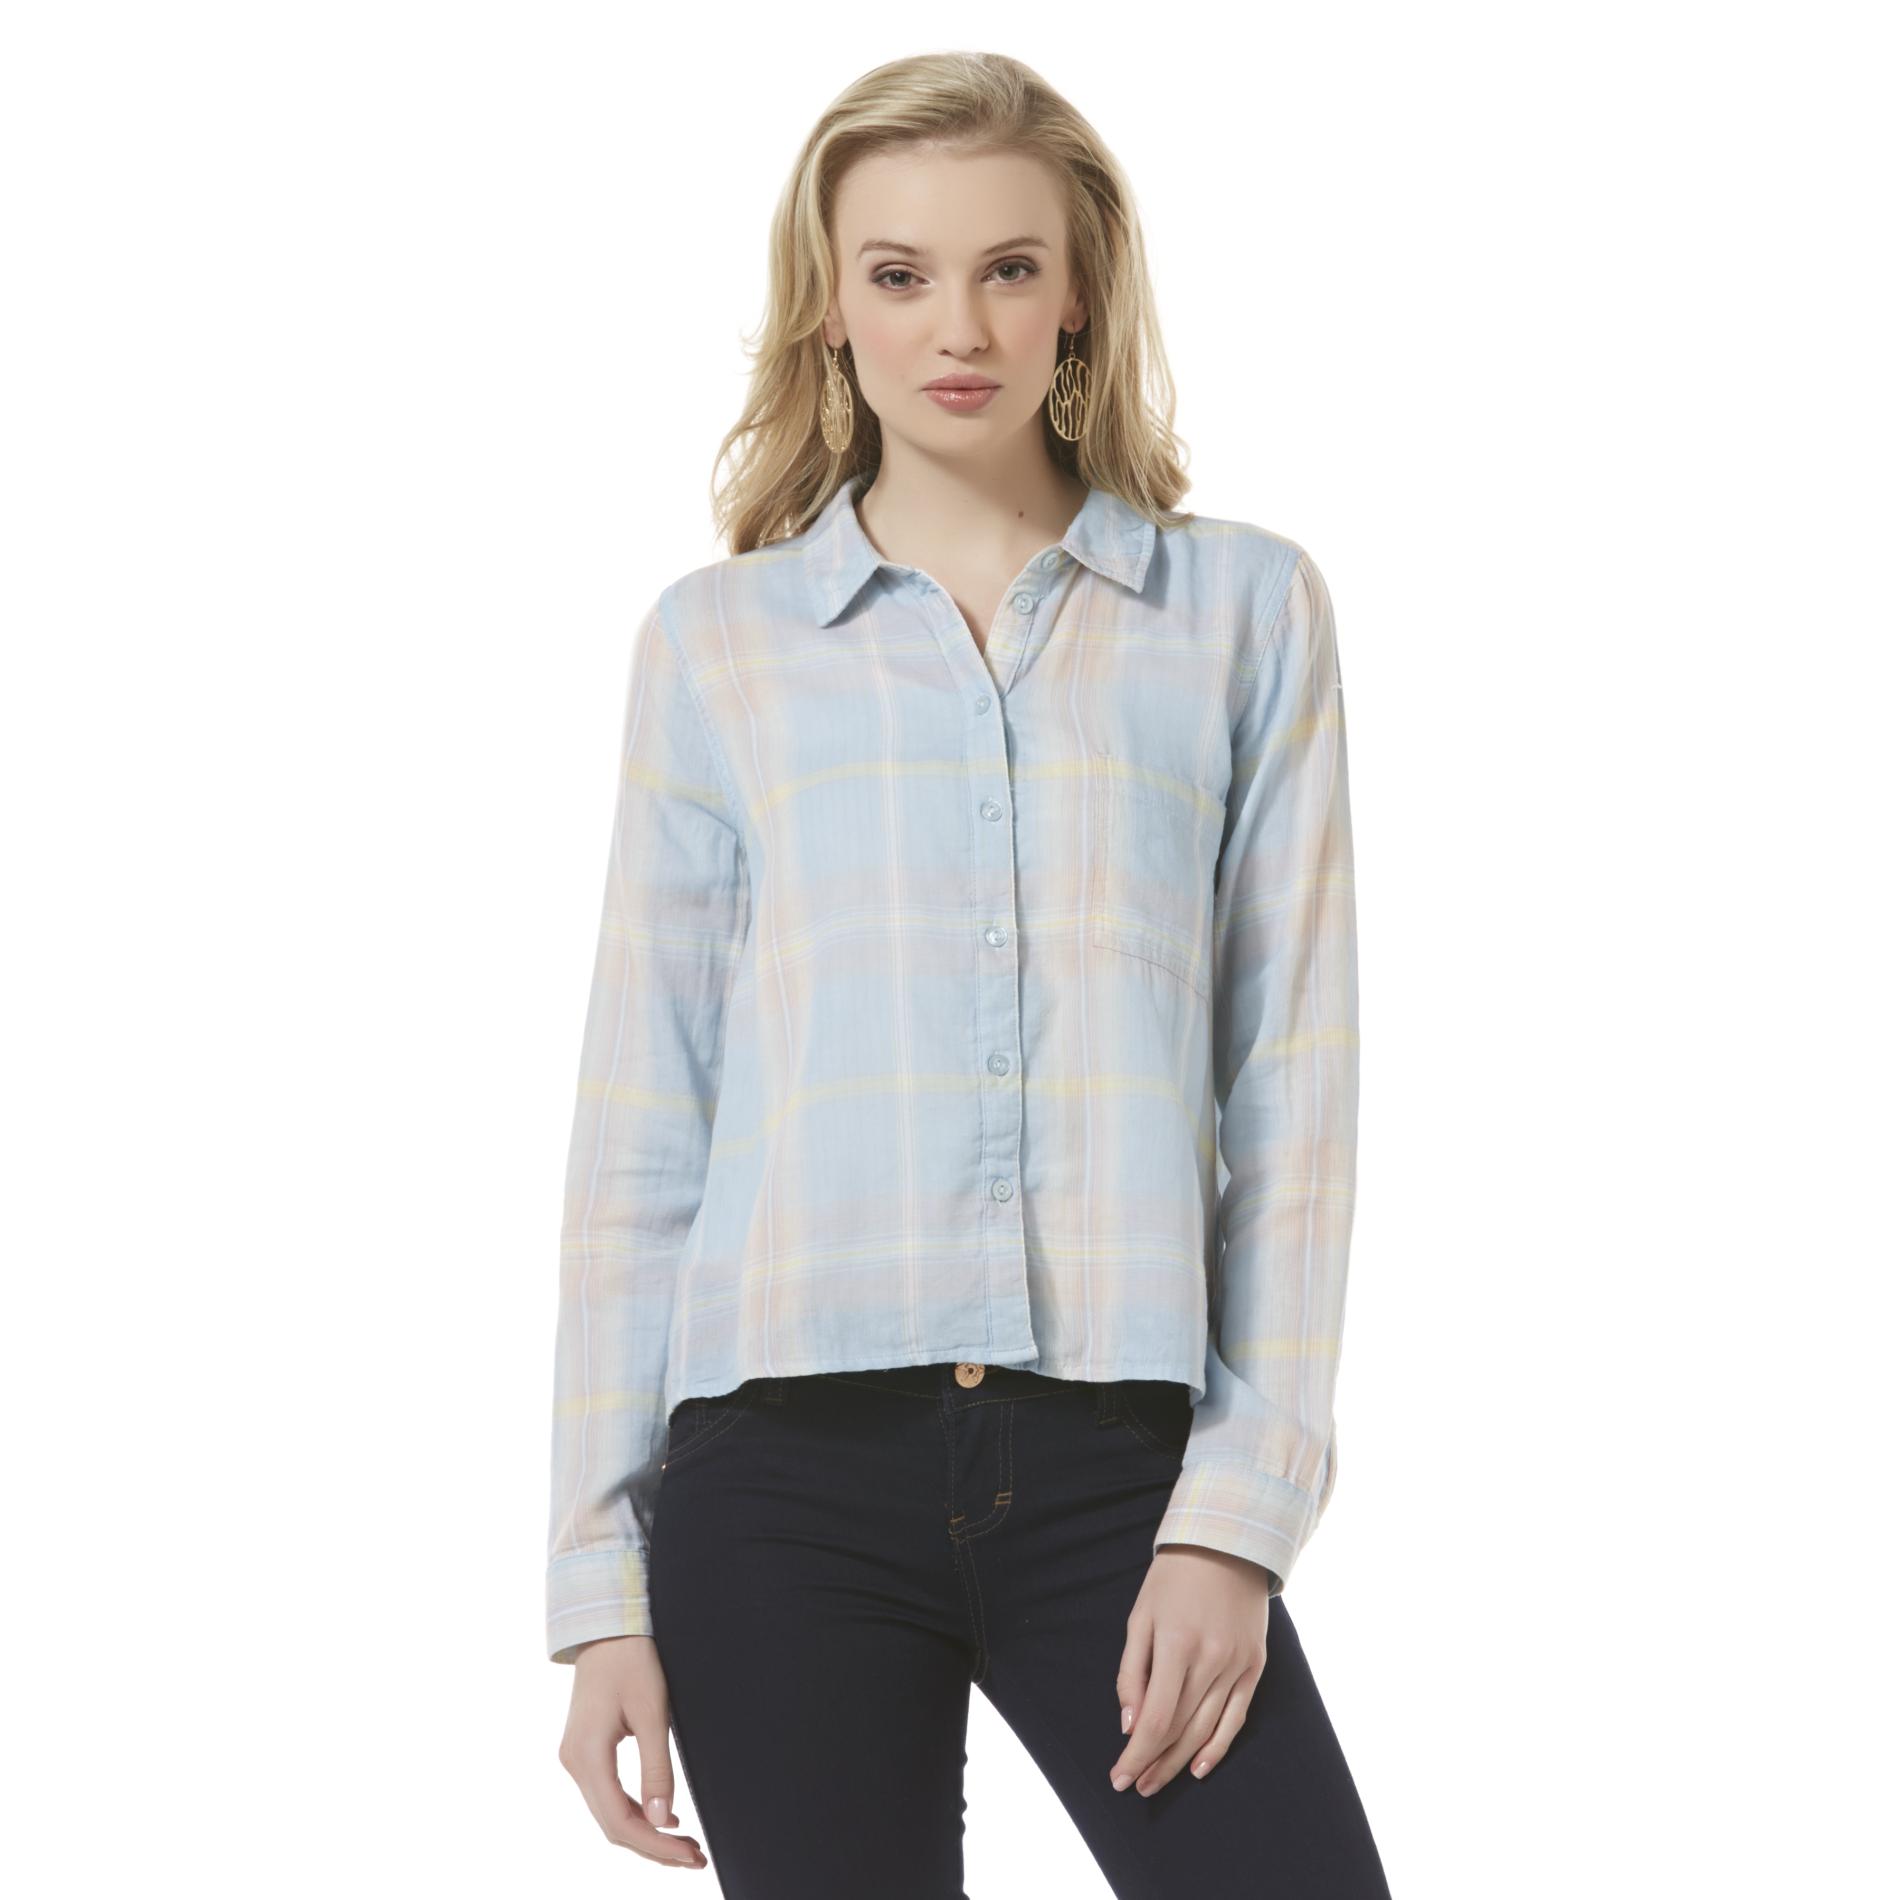 Canyon River Blues Women's Button-Front Shirt - Plaid